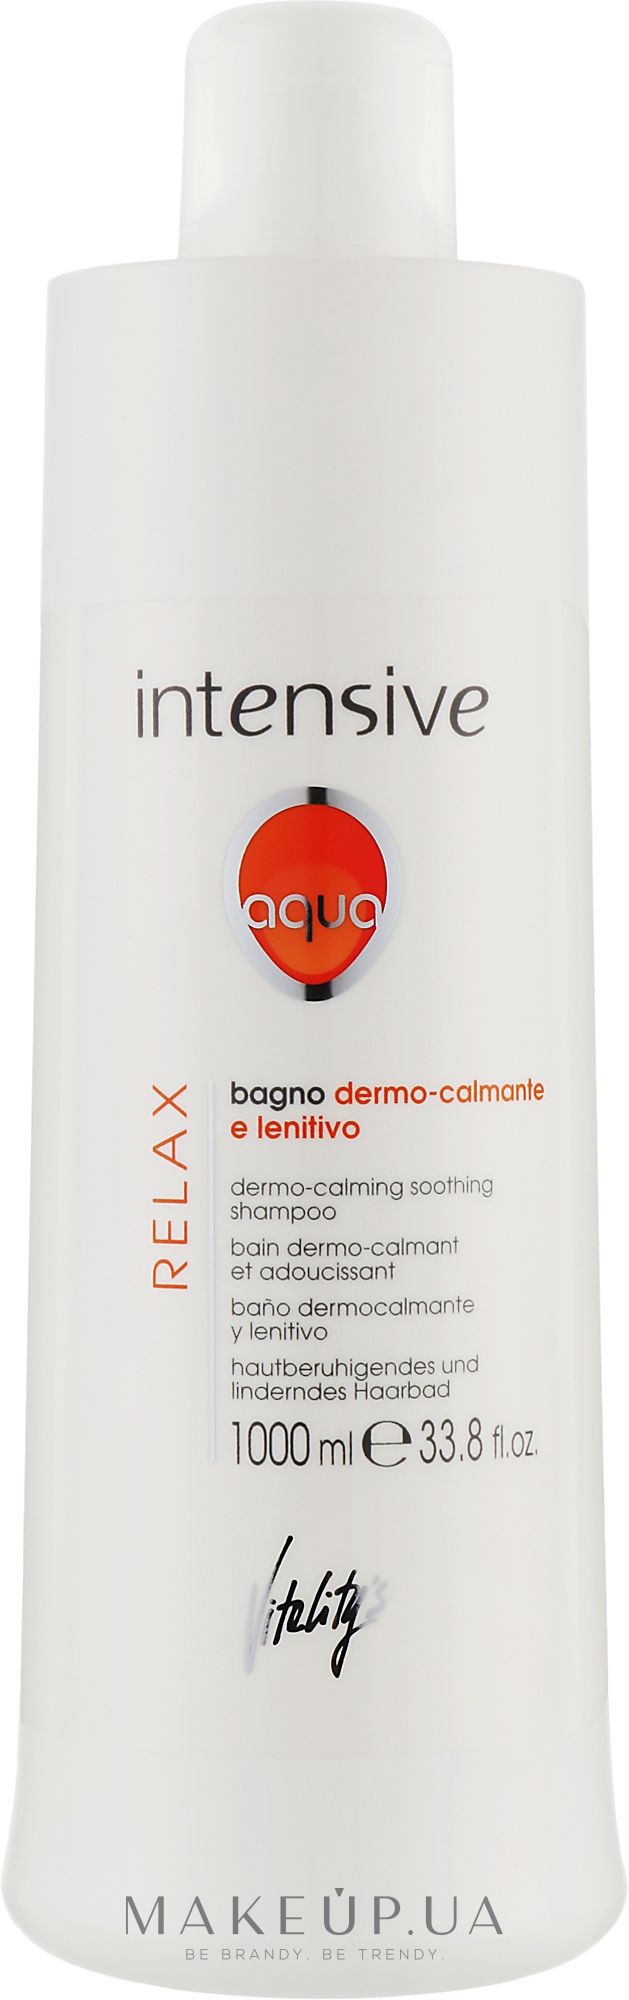 Мягкий успокаивающий шампунь - Vitality's Intensive Aqua Relax Dermo-Calming Shampoo — фото 1000ml